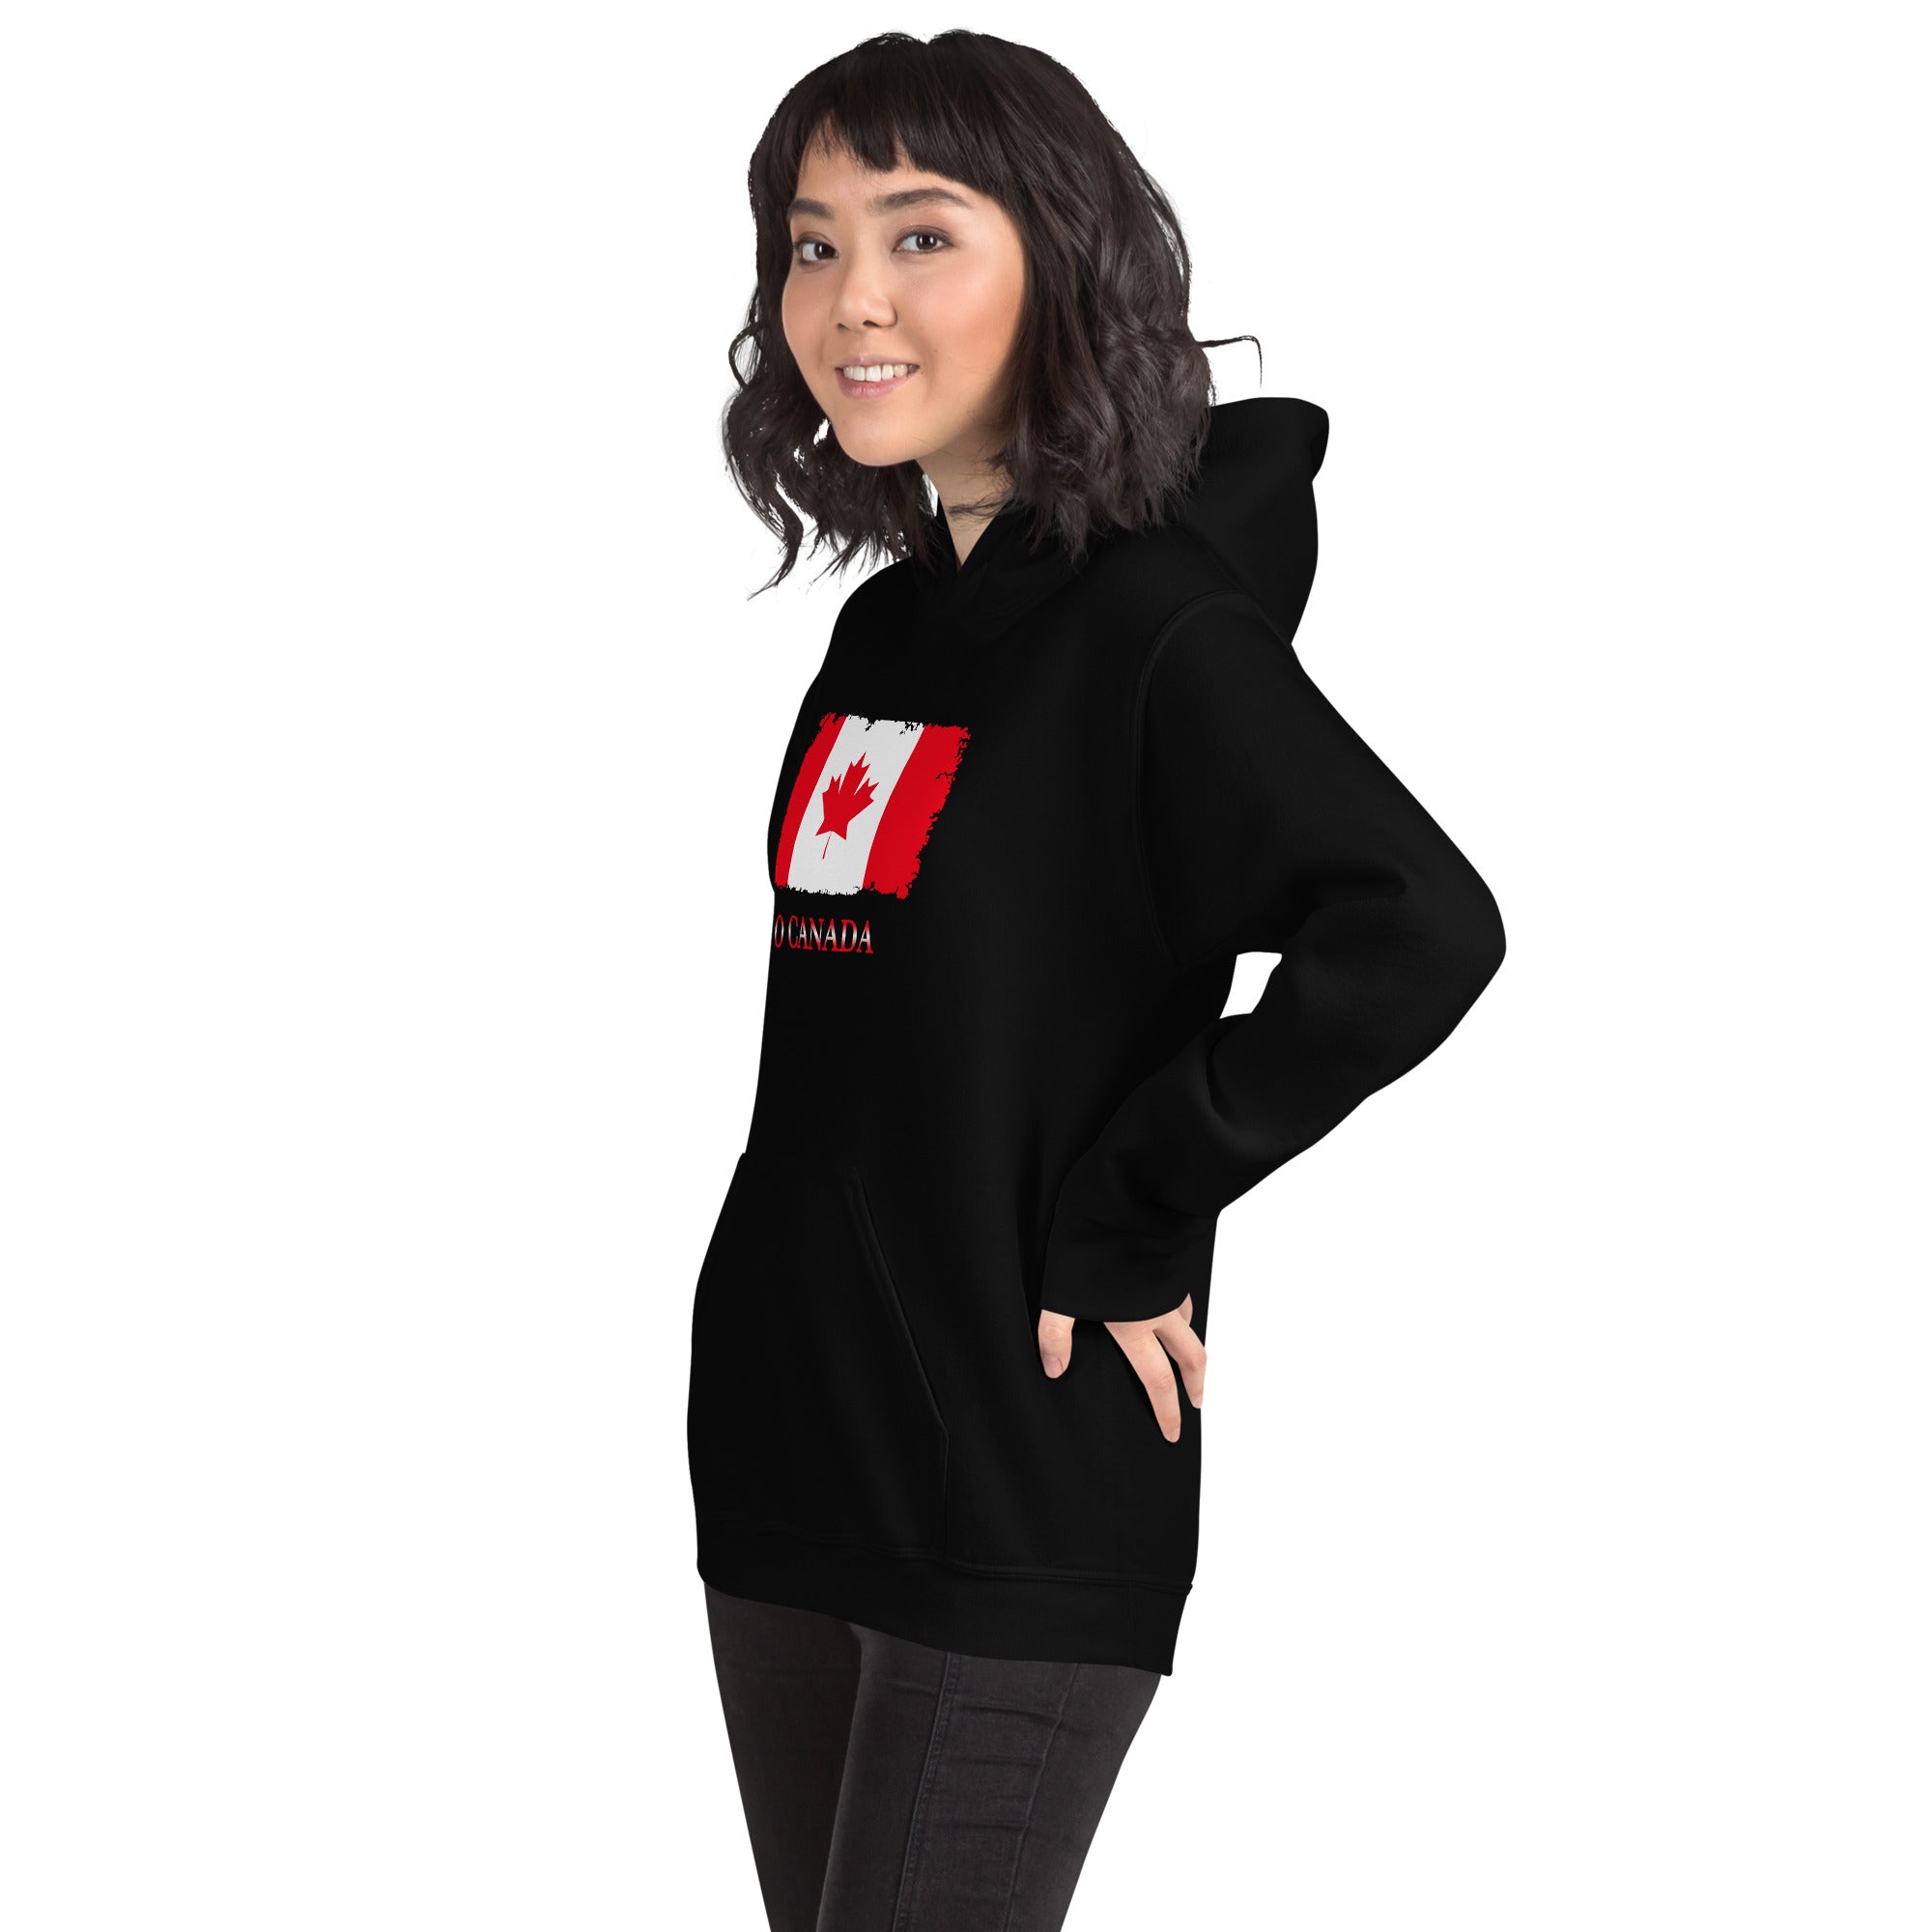 The Official Flag of Canada Maple Leaf  Unisex Hoodie Sweatshirt